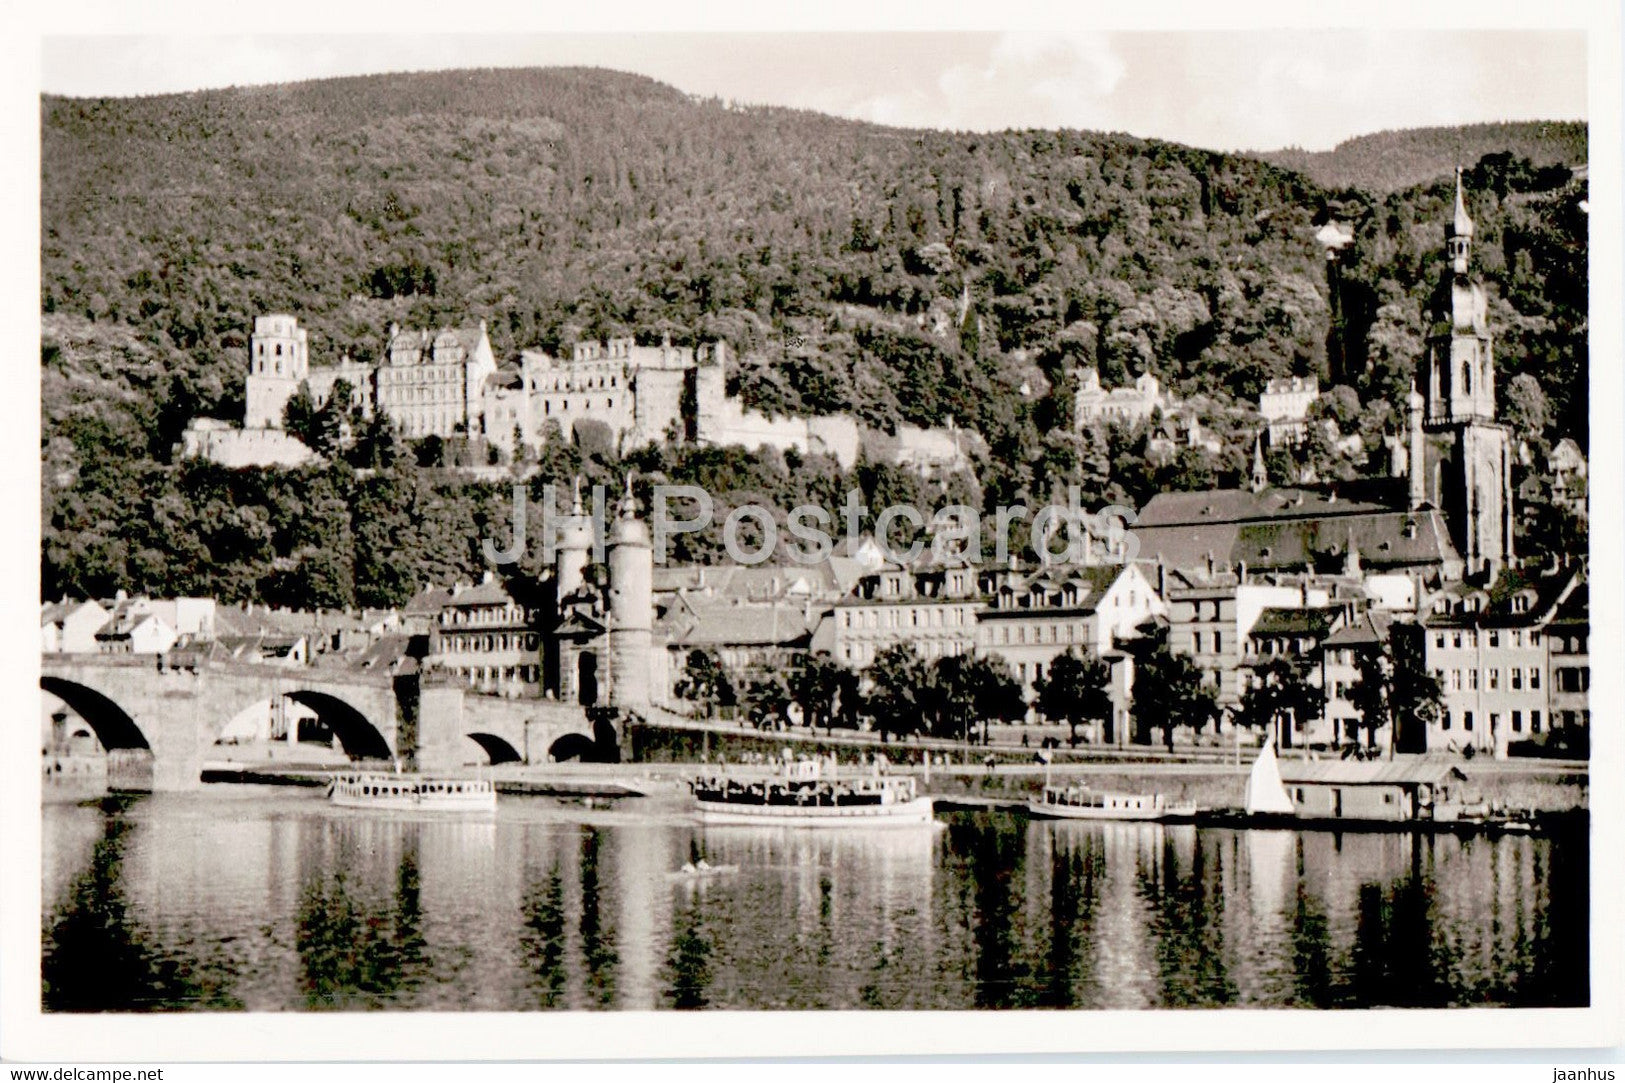 Heidelberg - Partie am Neckar - old postcard - Germany - unused - JH Postcards